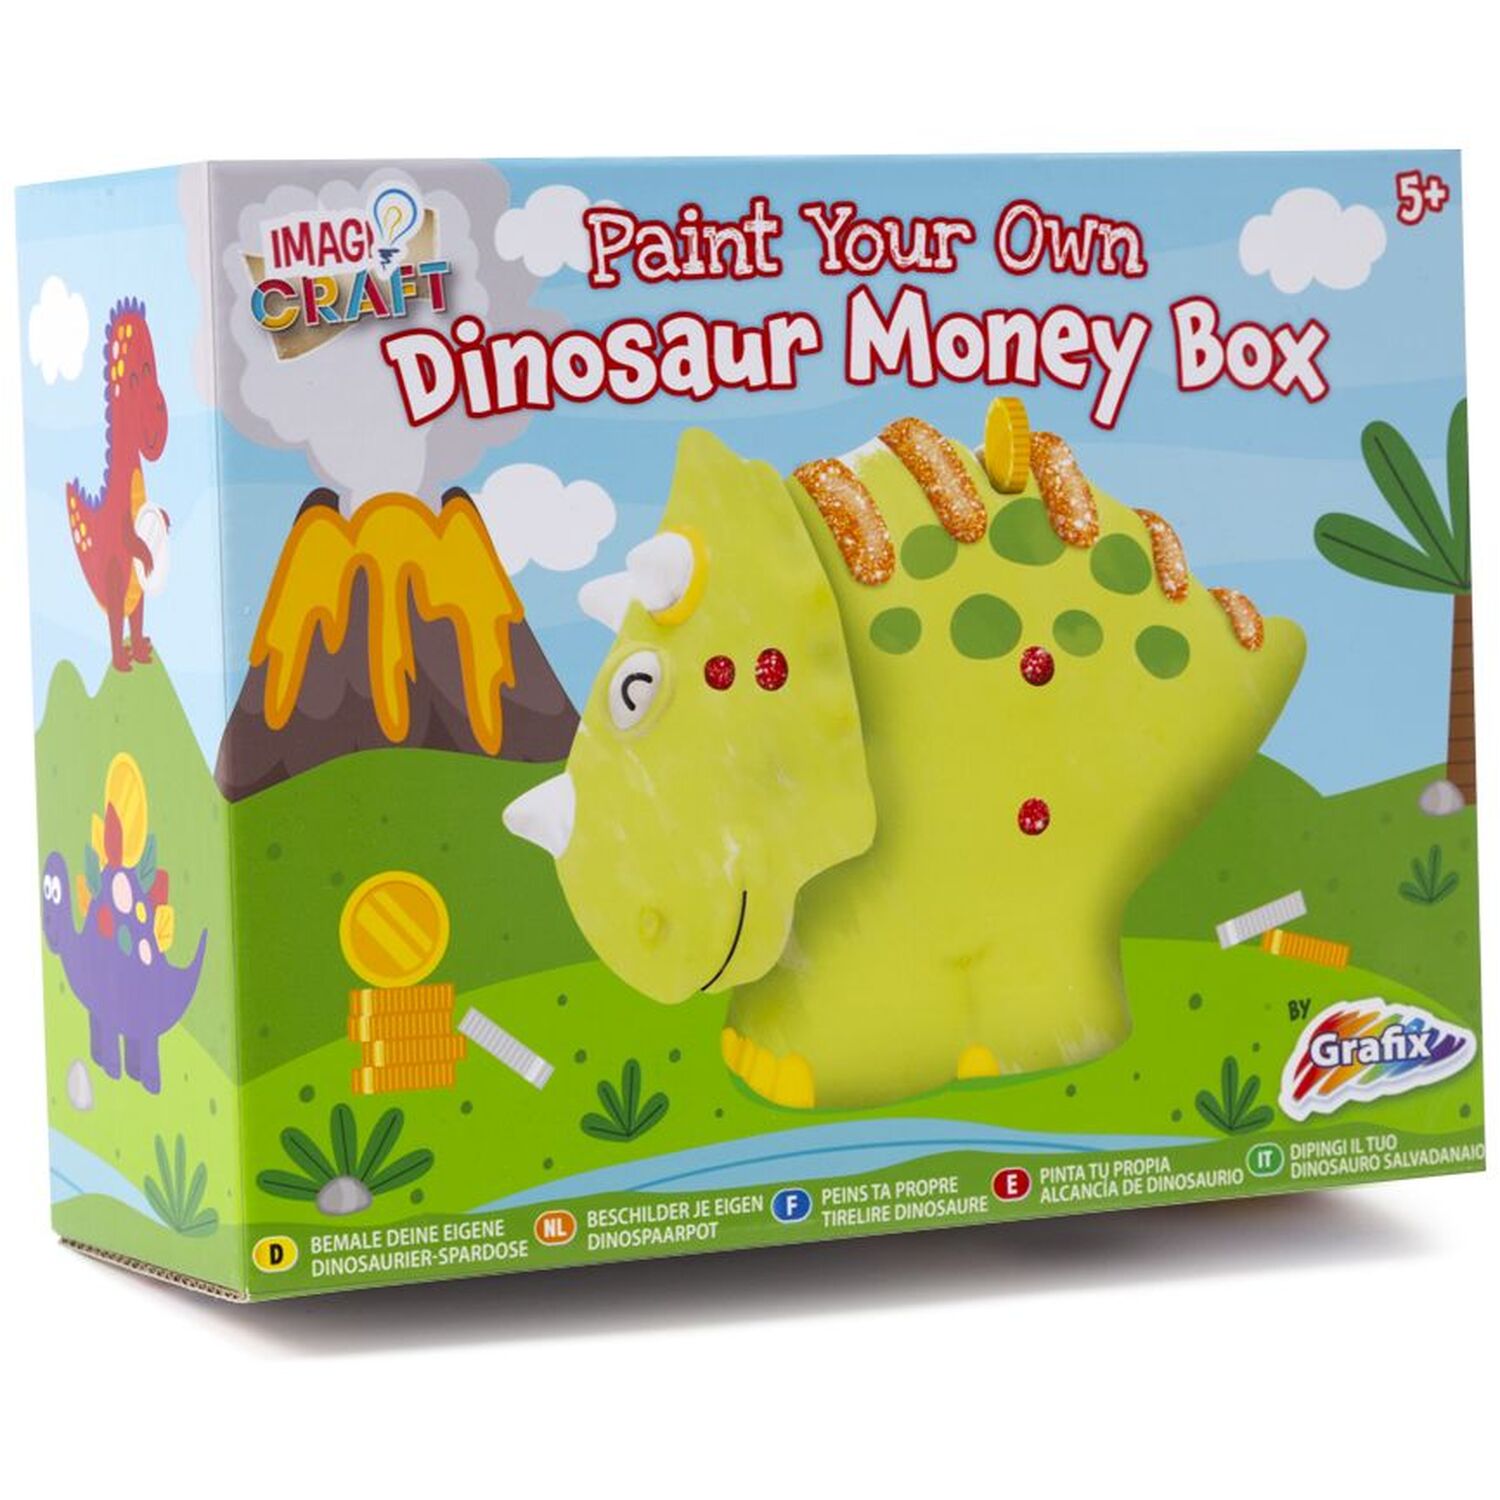 Grafix Paint Your Own Dinosaur Money Box Kit Image 1